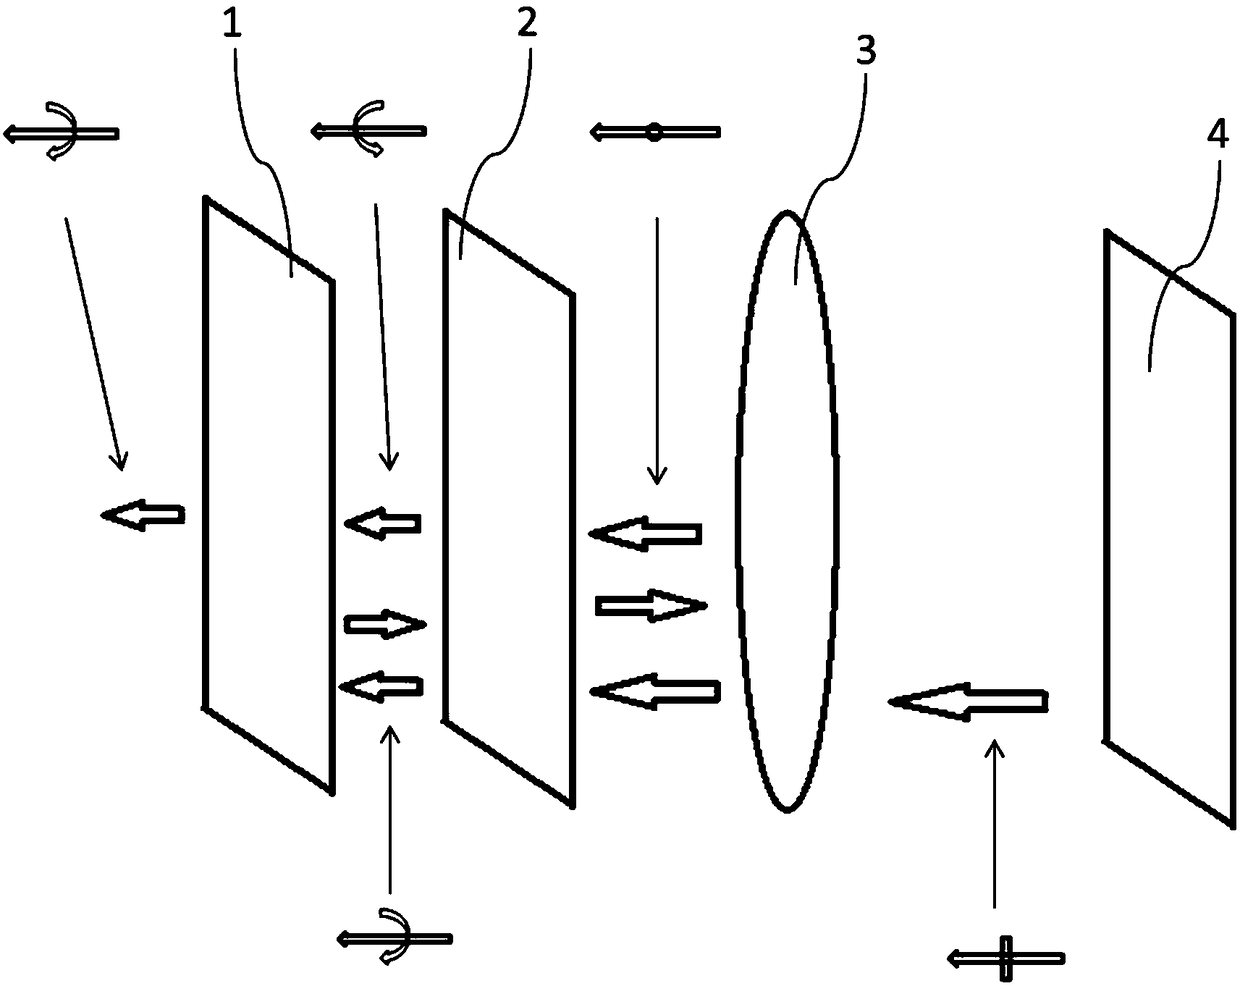 Optical amplification module of folding optical path